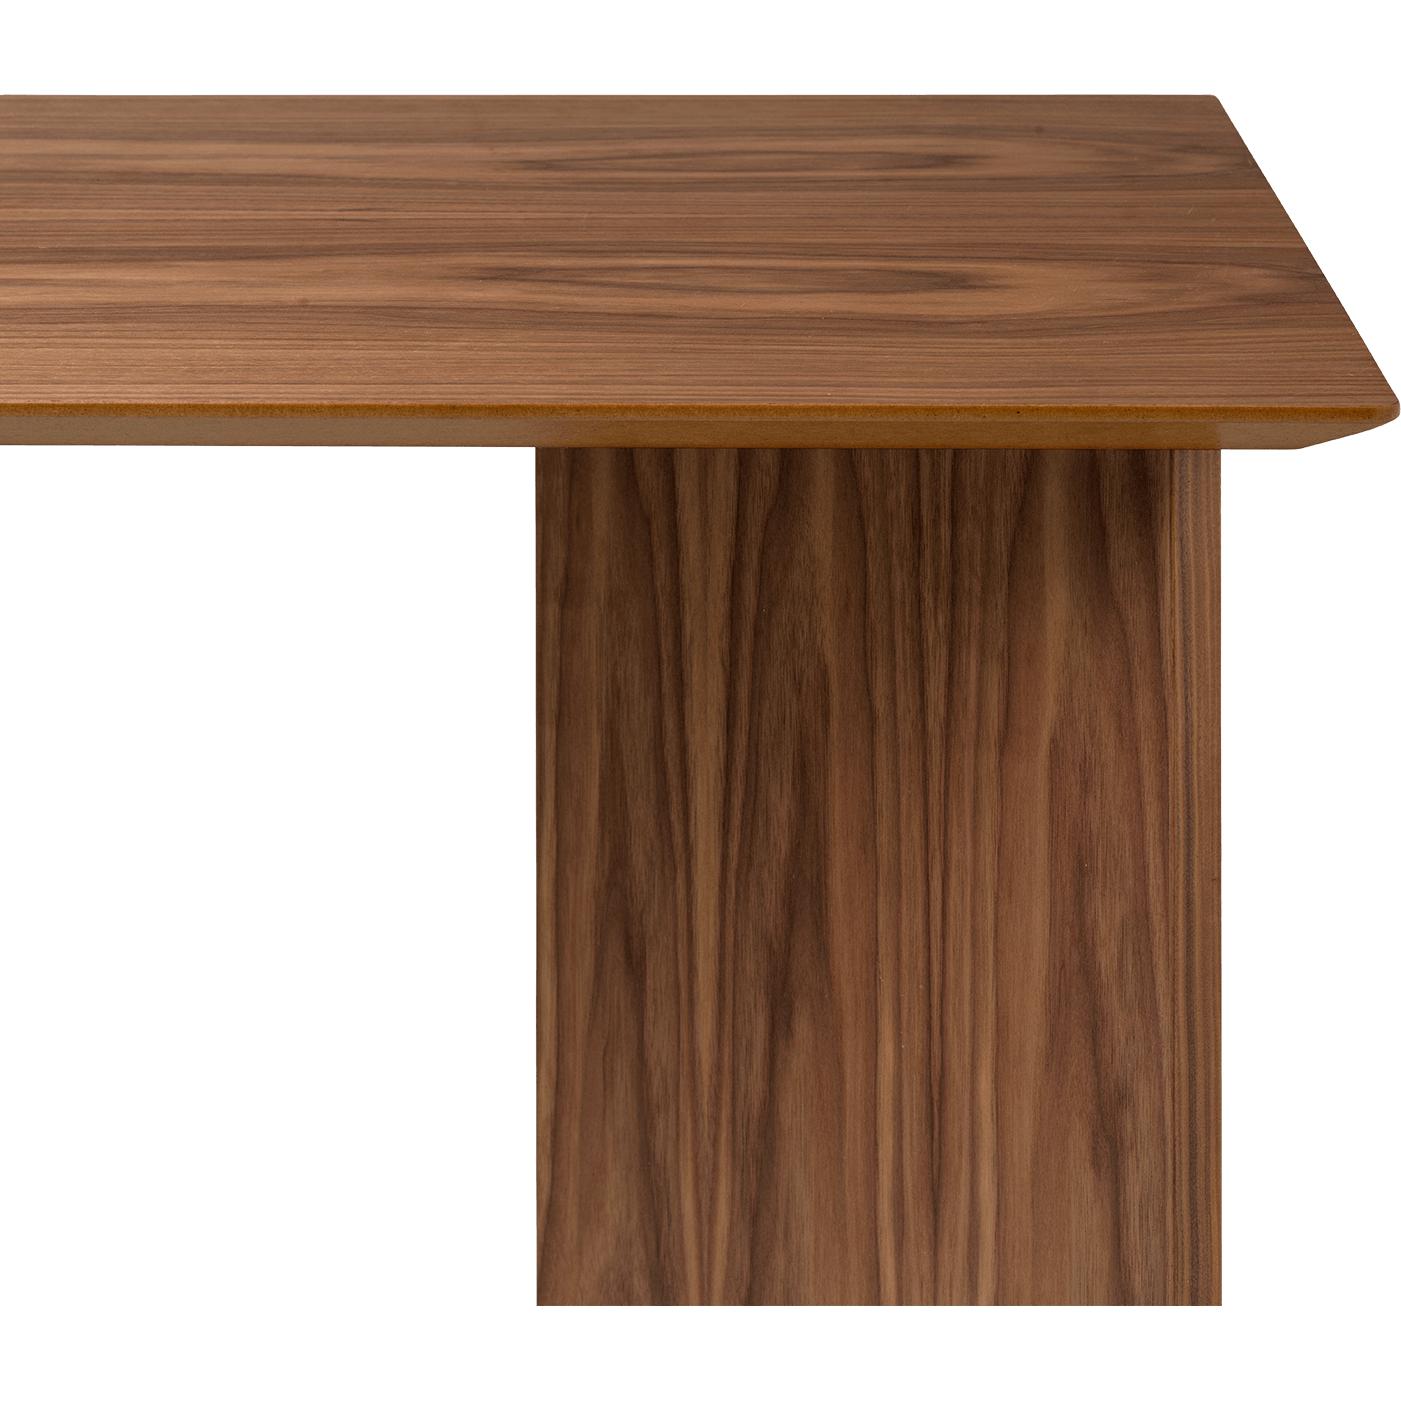 Ferm Living Mingle Tischplatte Nussbaum, 210 Cm